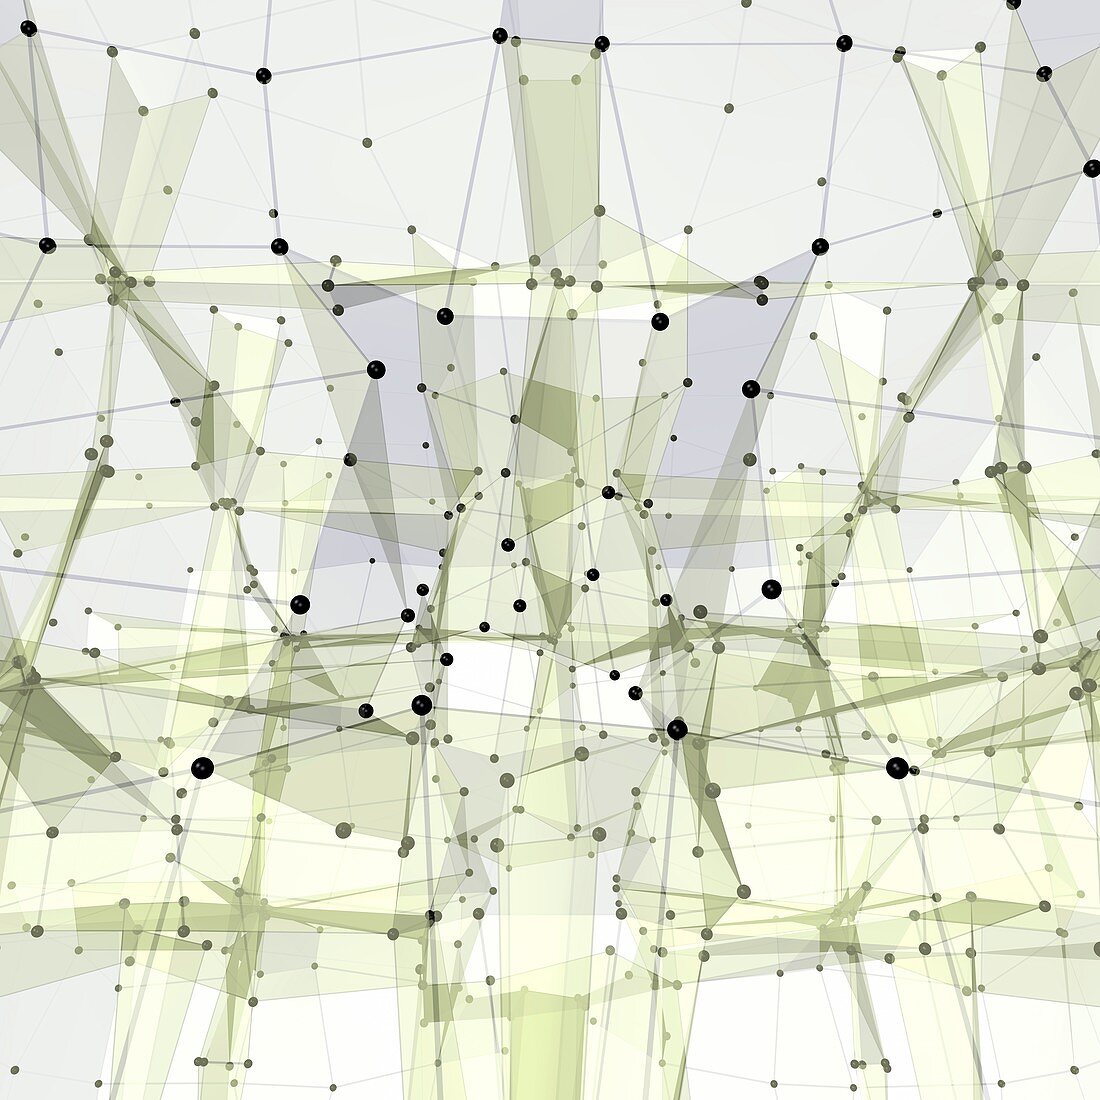 Network,conceptual illustration